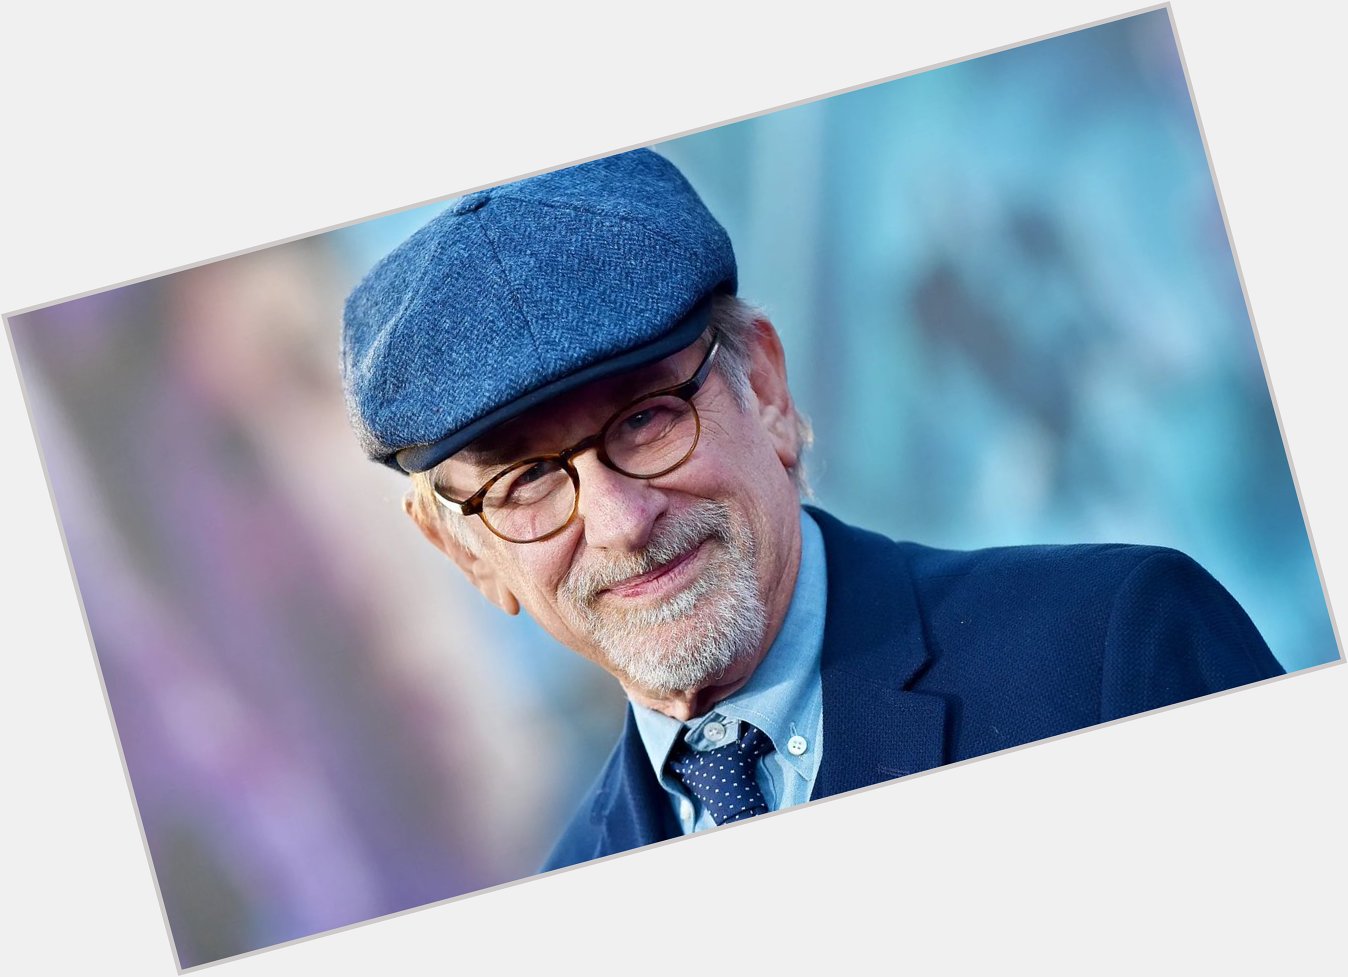  Happy birthday to director Steven Spielberg! 